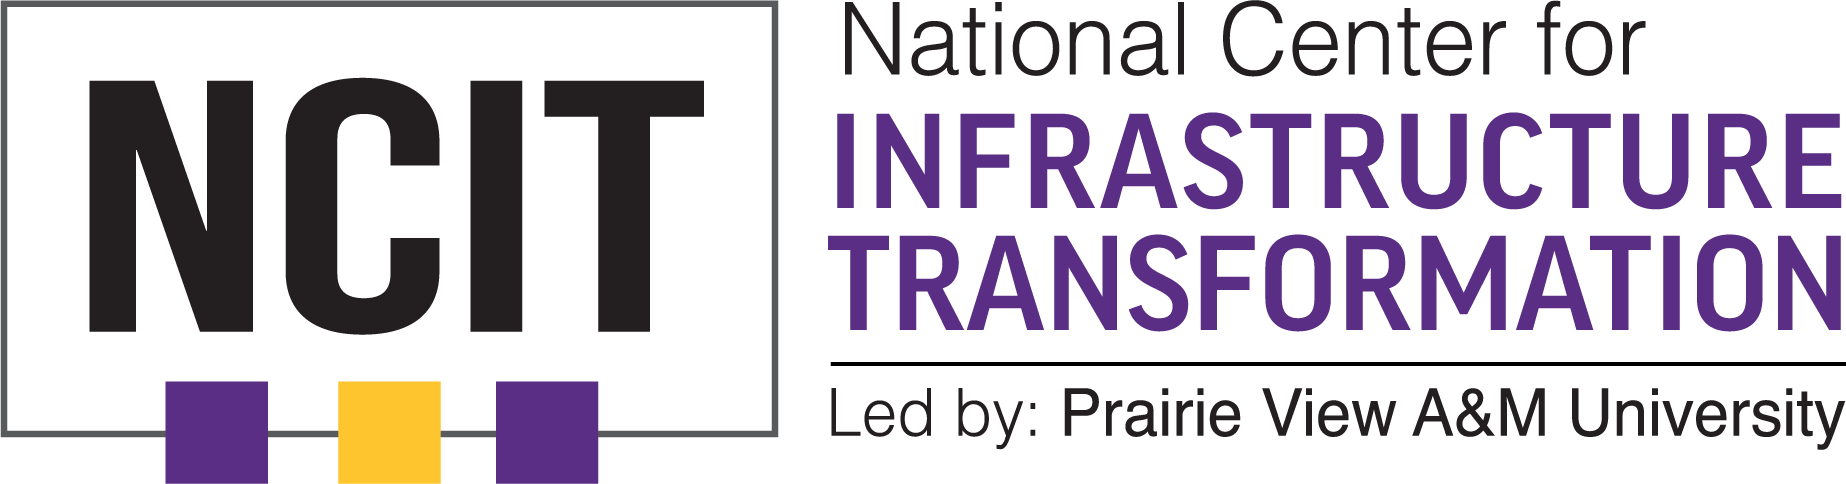 National Center for Infrastructure Transformation (NCIT) Logo